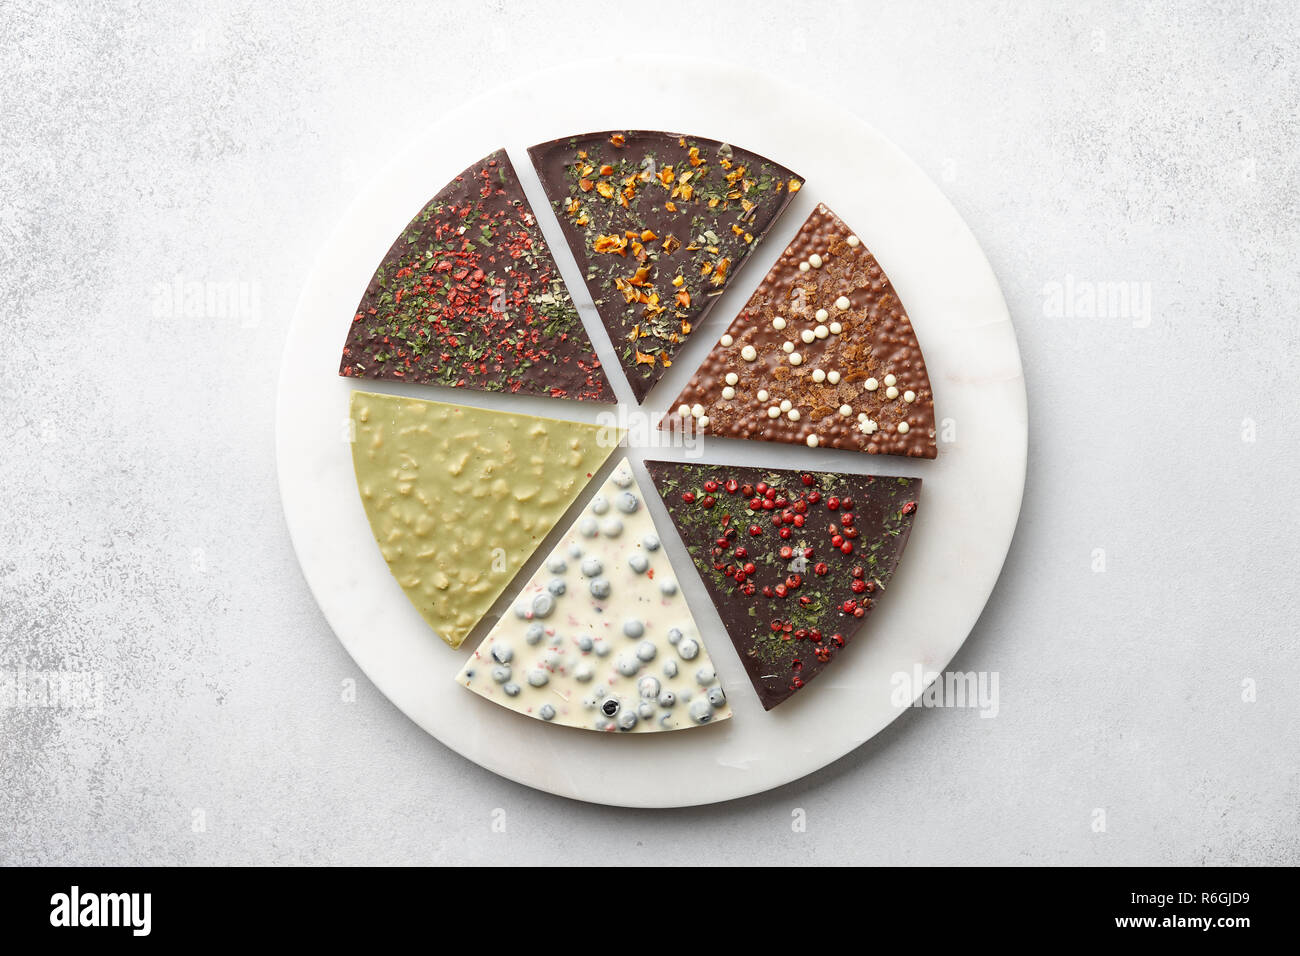 Round chocolate pizza pieces on white textured background Stock Photo